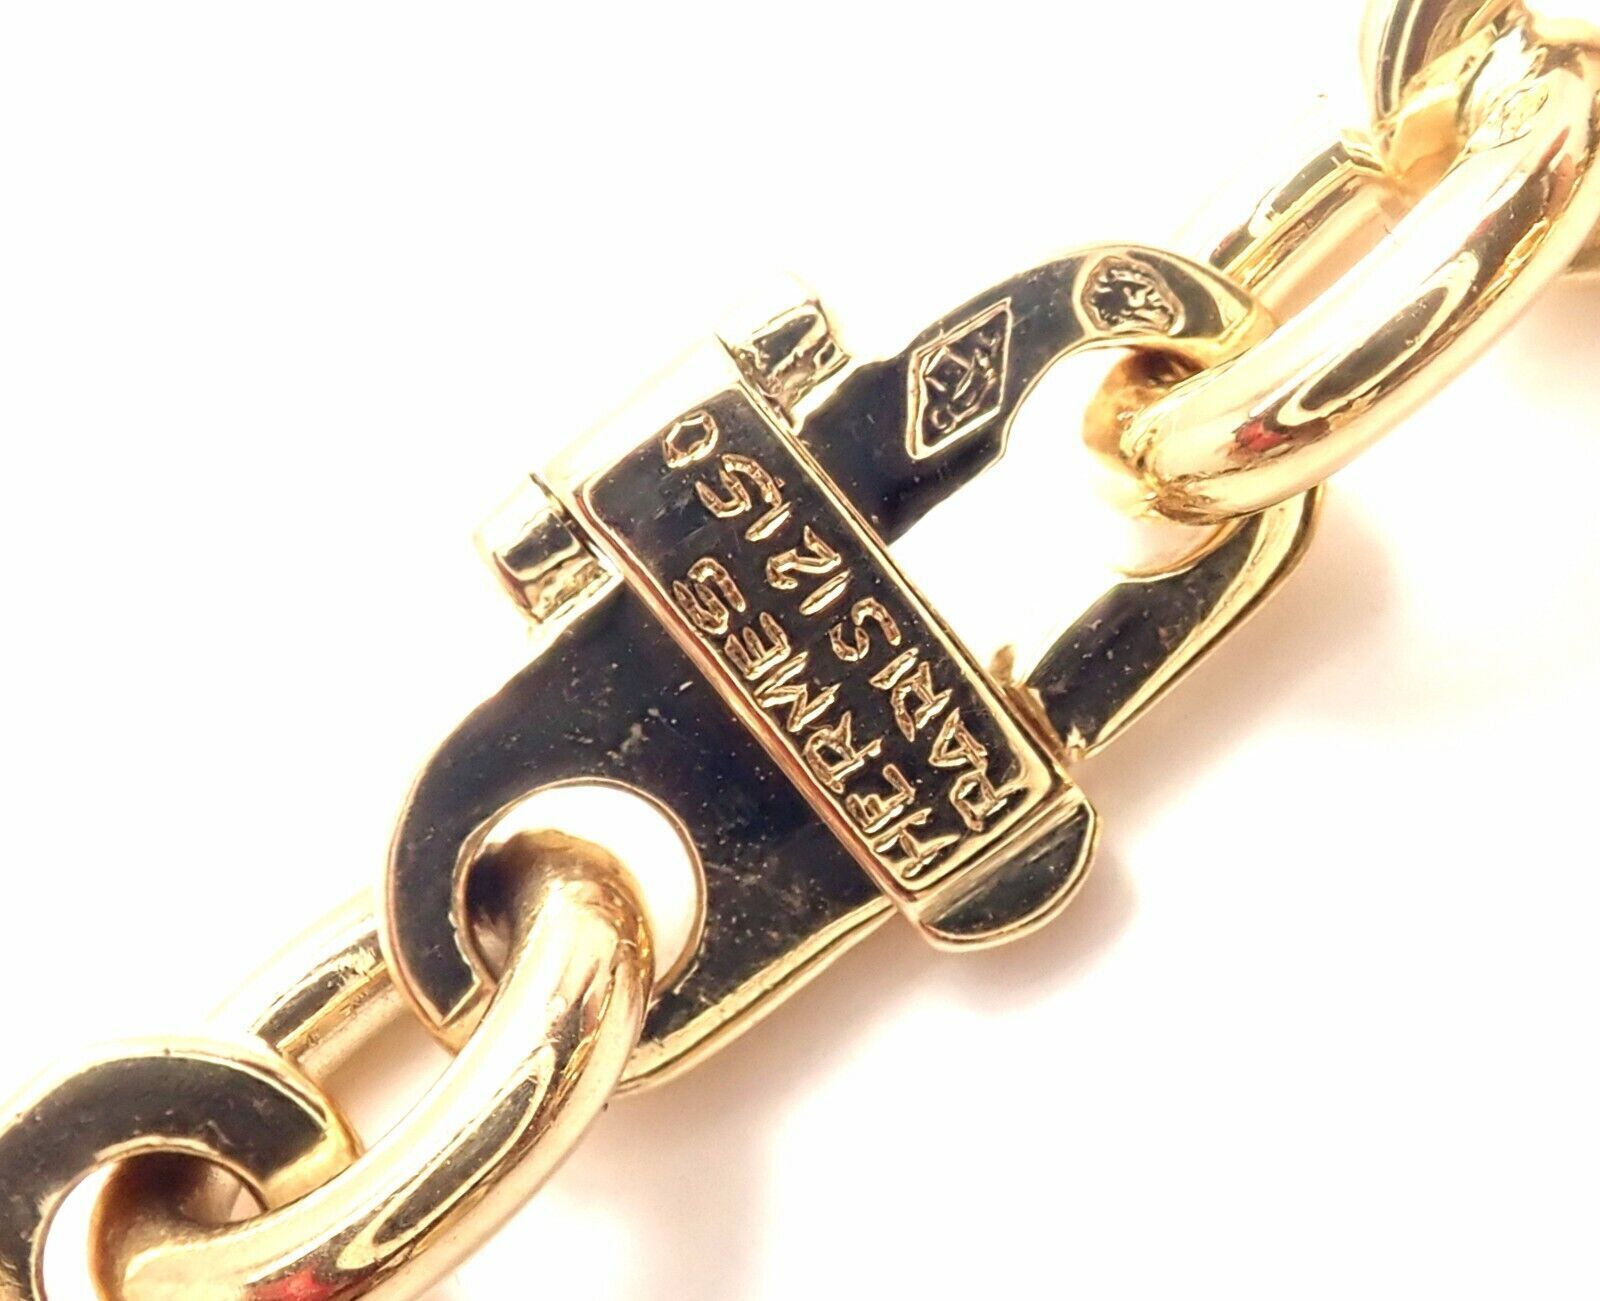 Stunning 18k Yellow Gold Charm Bracelet with 19 18k Gold Hermes